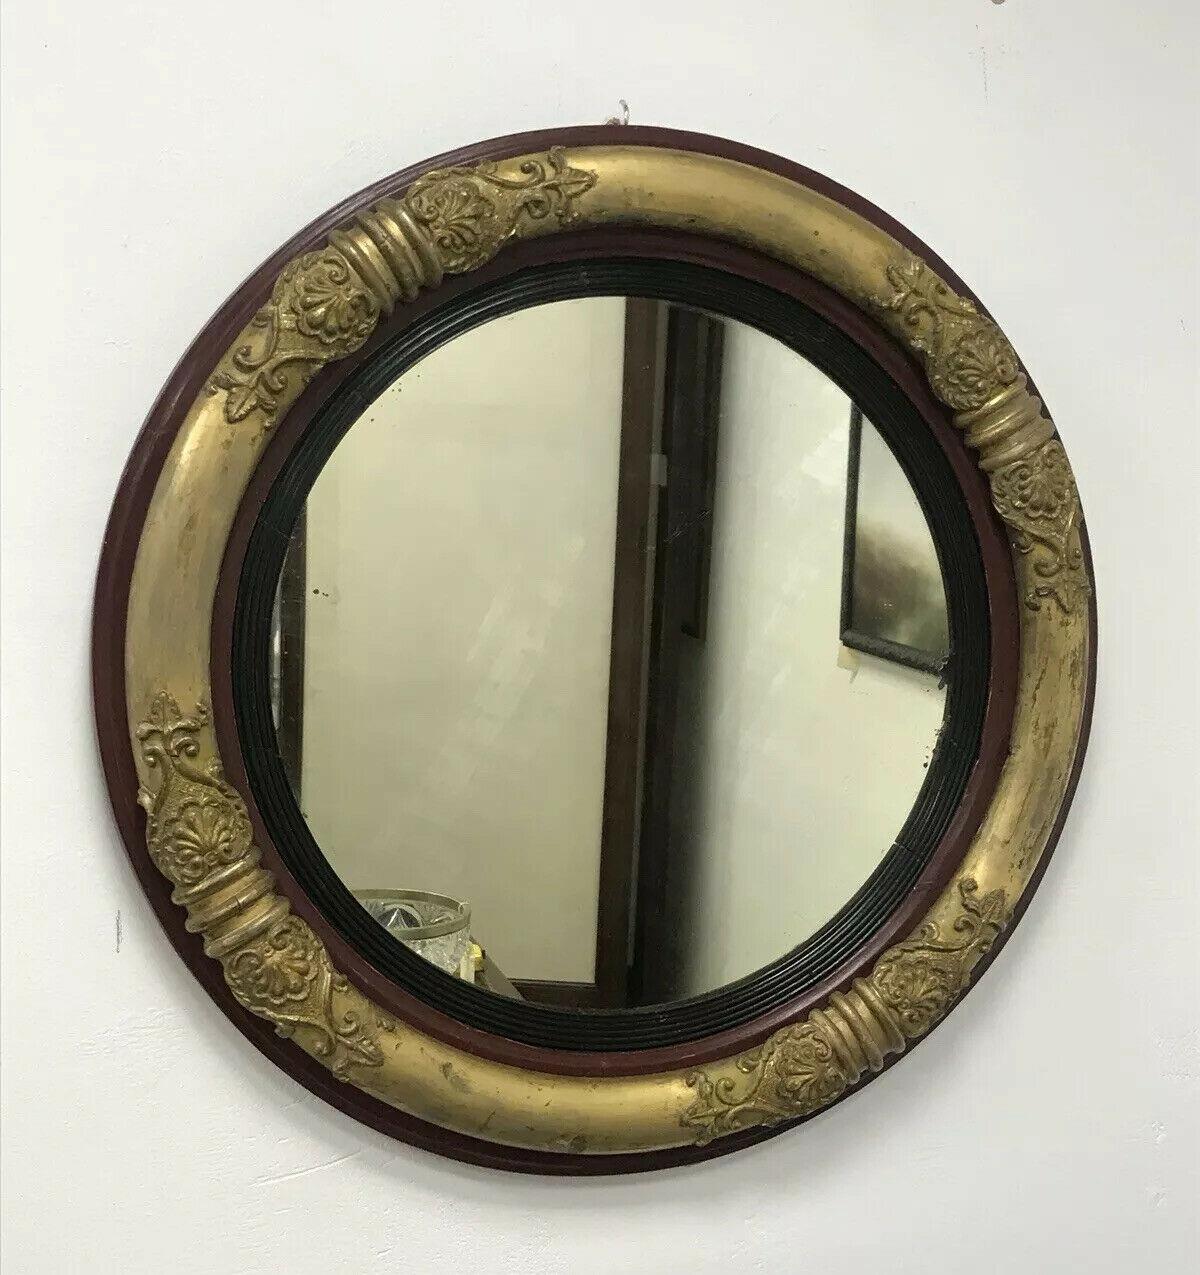 Original Regency circular wall mirror with ornate gold gilt frame.

   